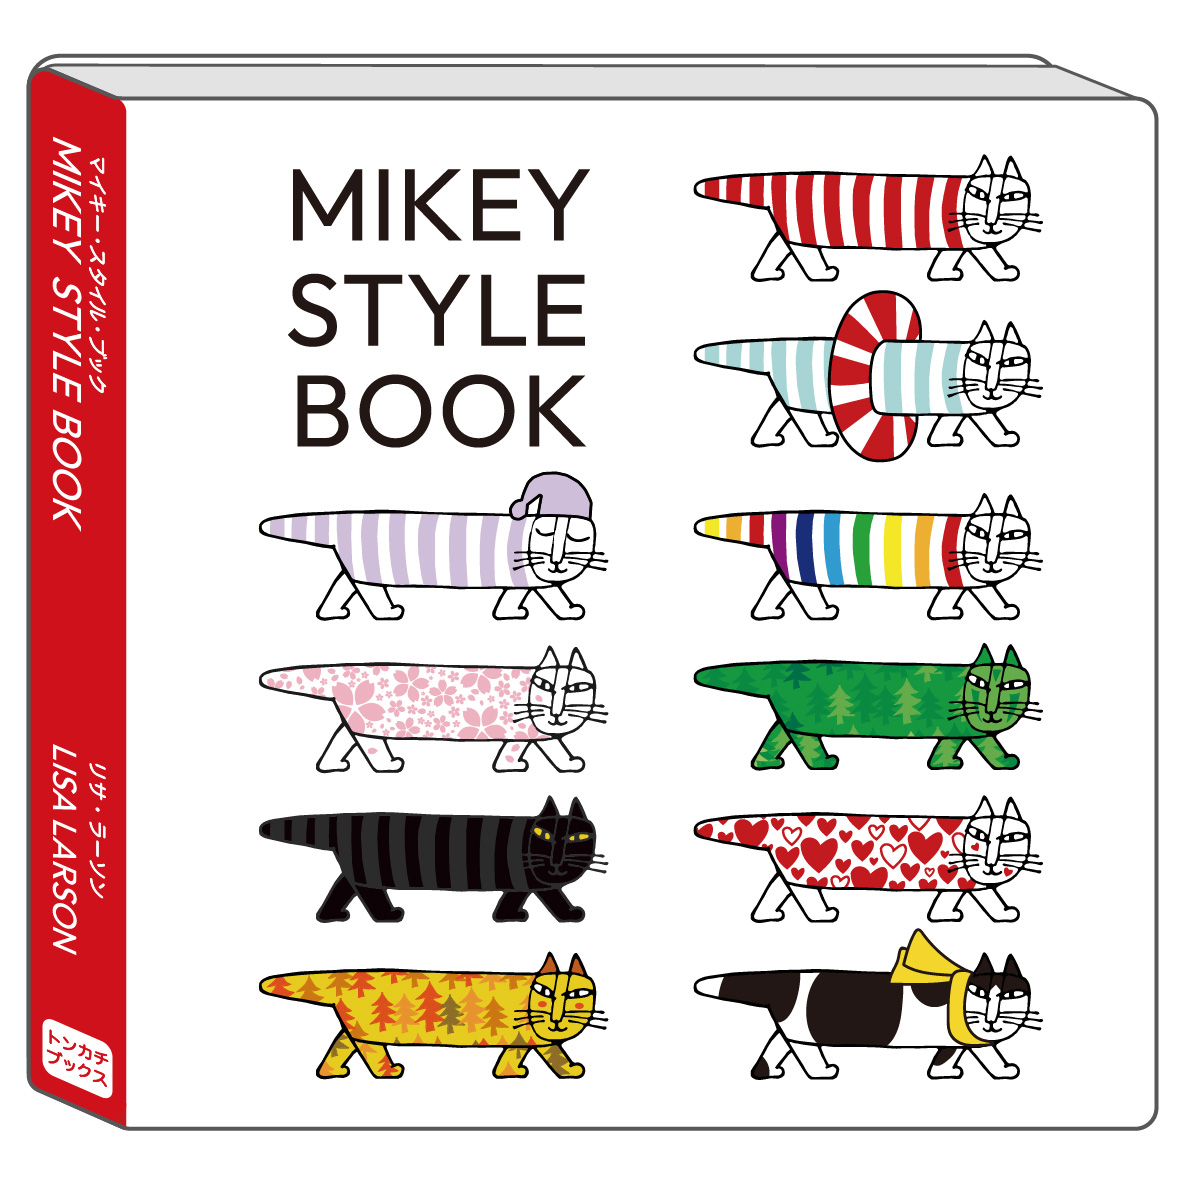 MIKEY STYLE BOOK | Lisa Larson スペシャルサイト